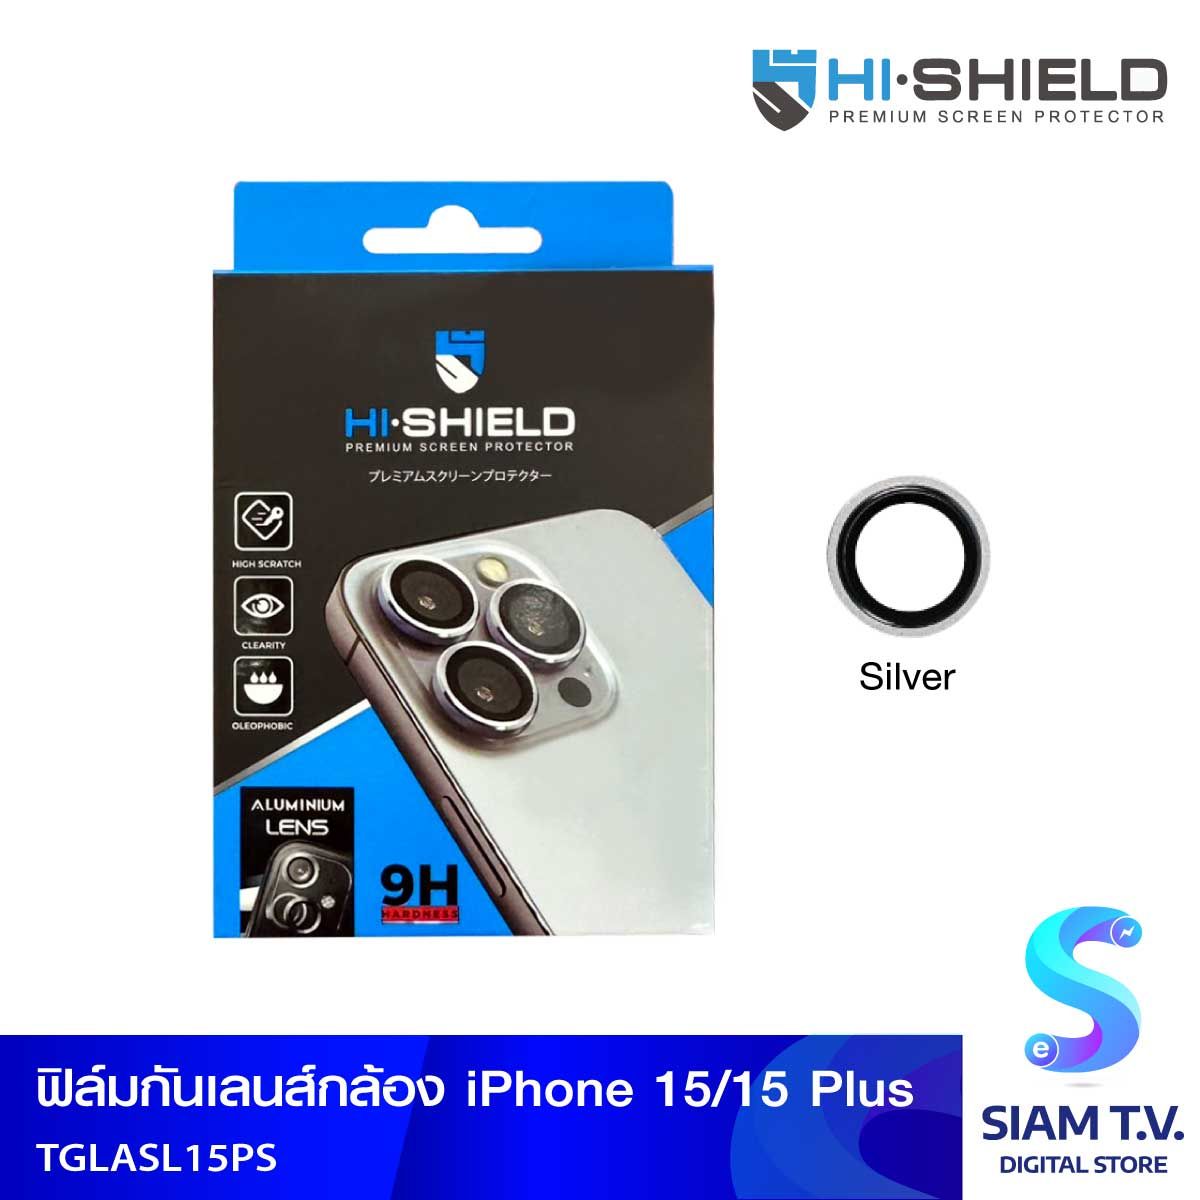 HISHIELD Aluminium Lens Silver iPhone15/15Plus